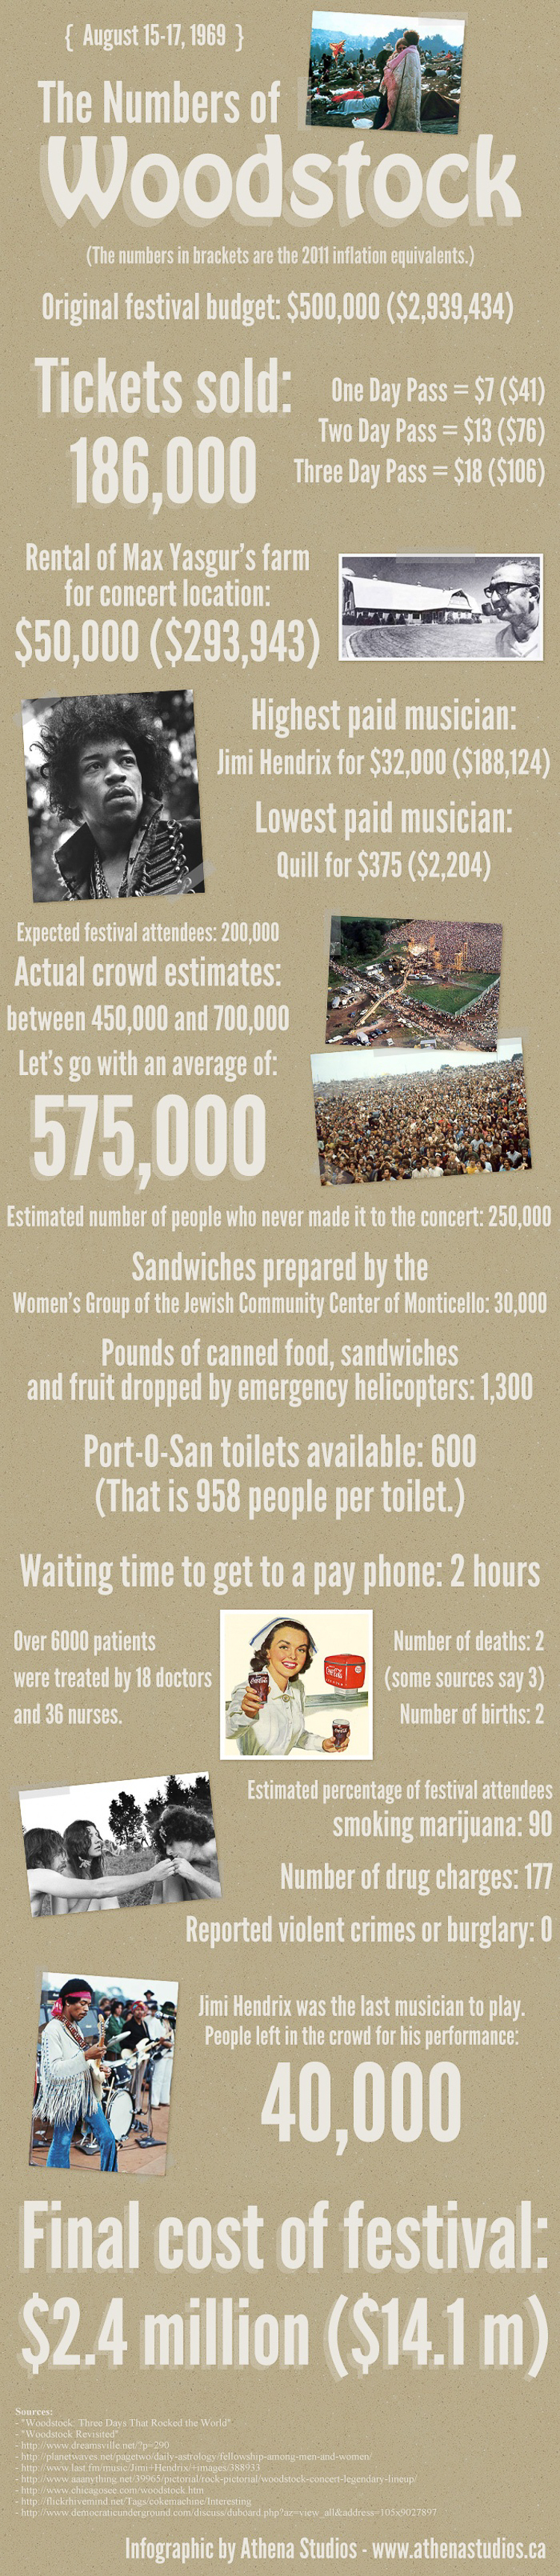 2_Woodstock Stats